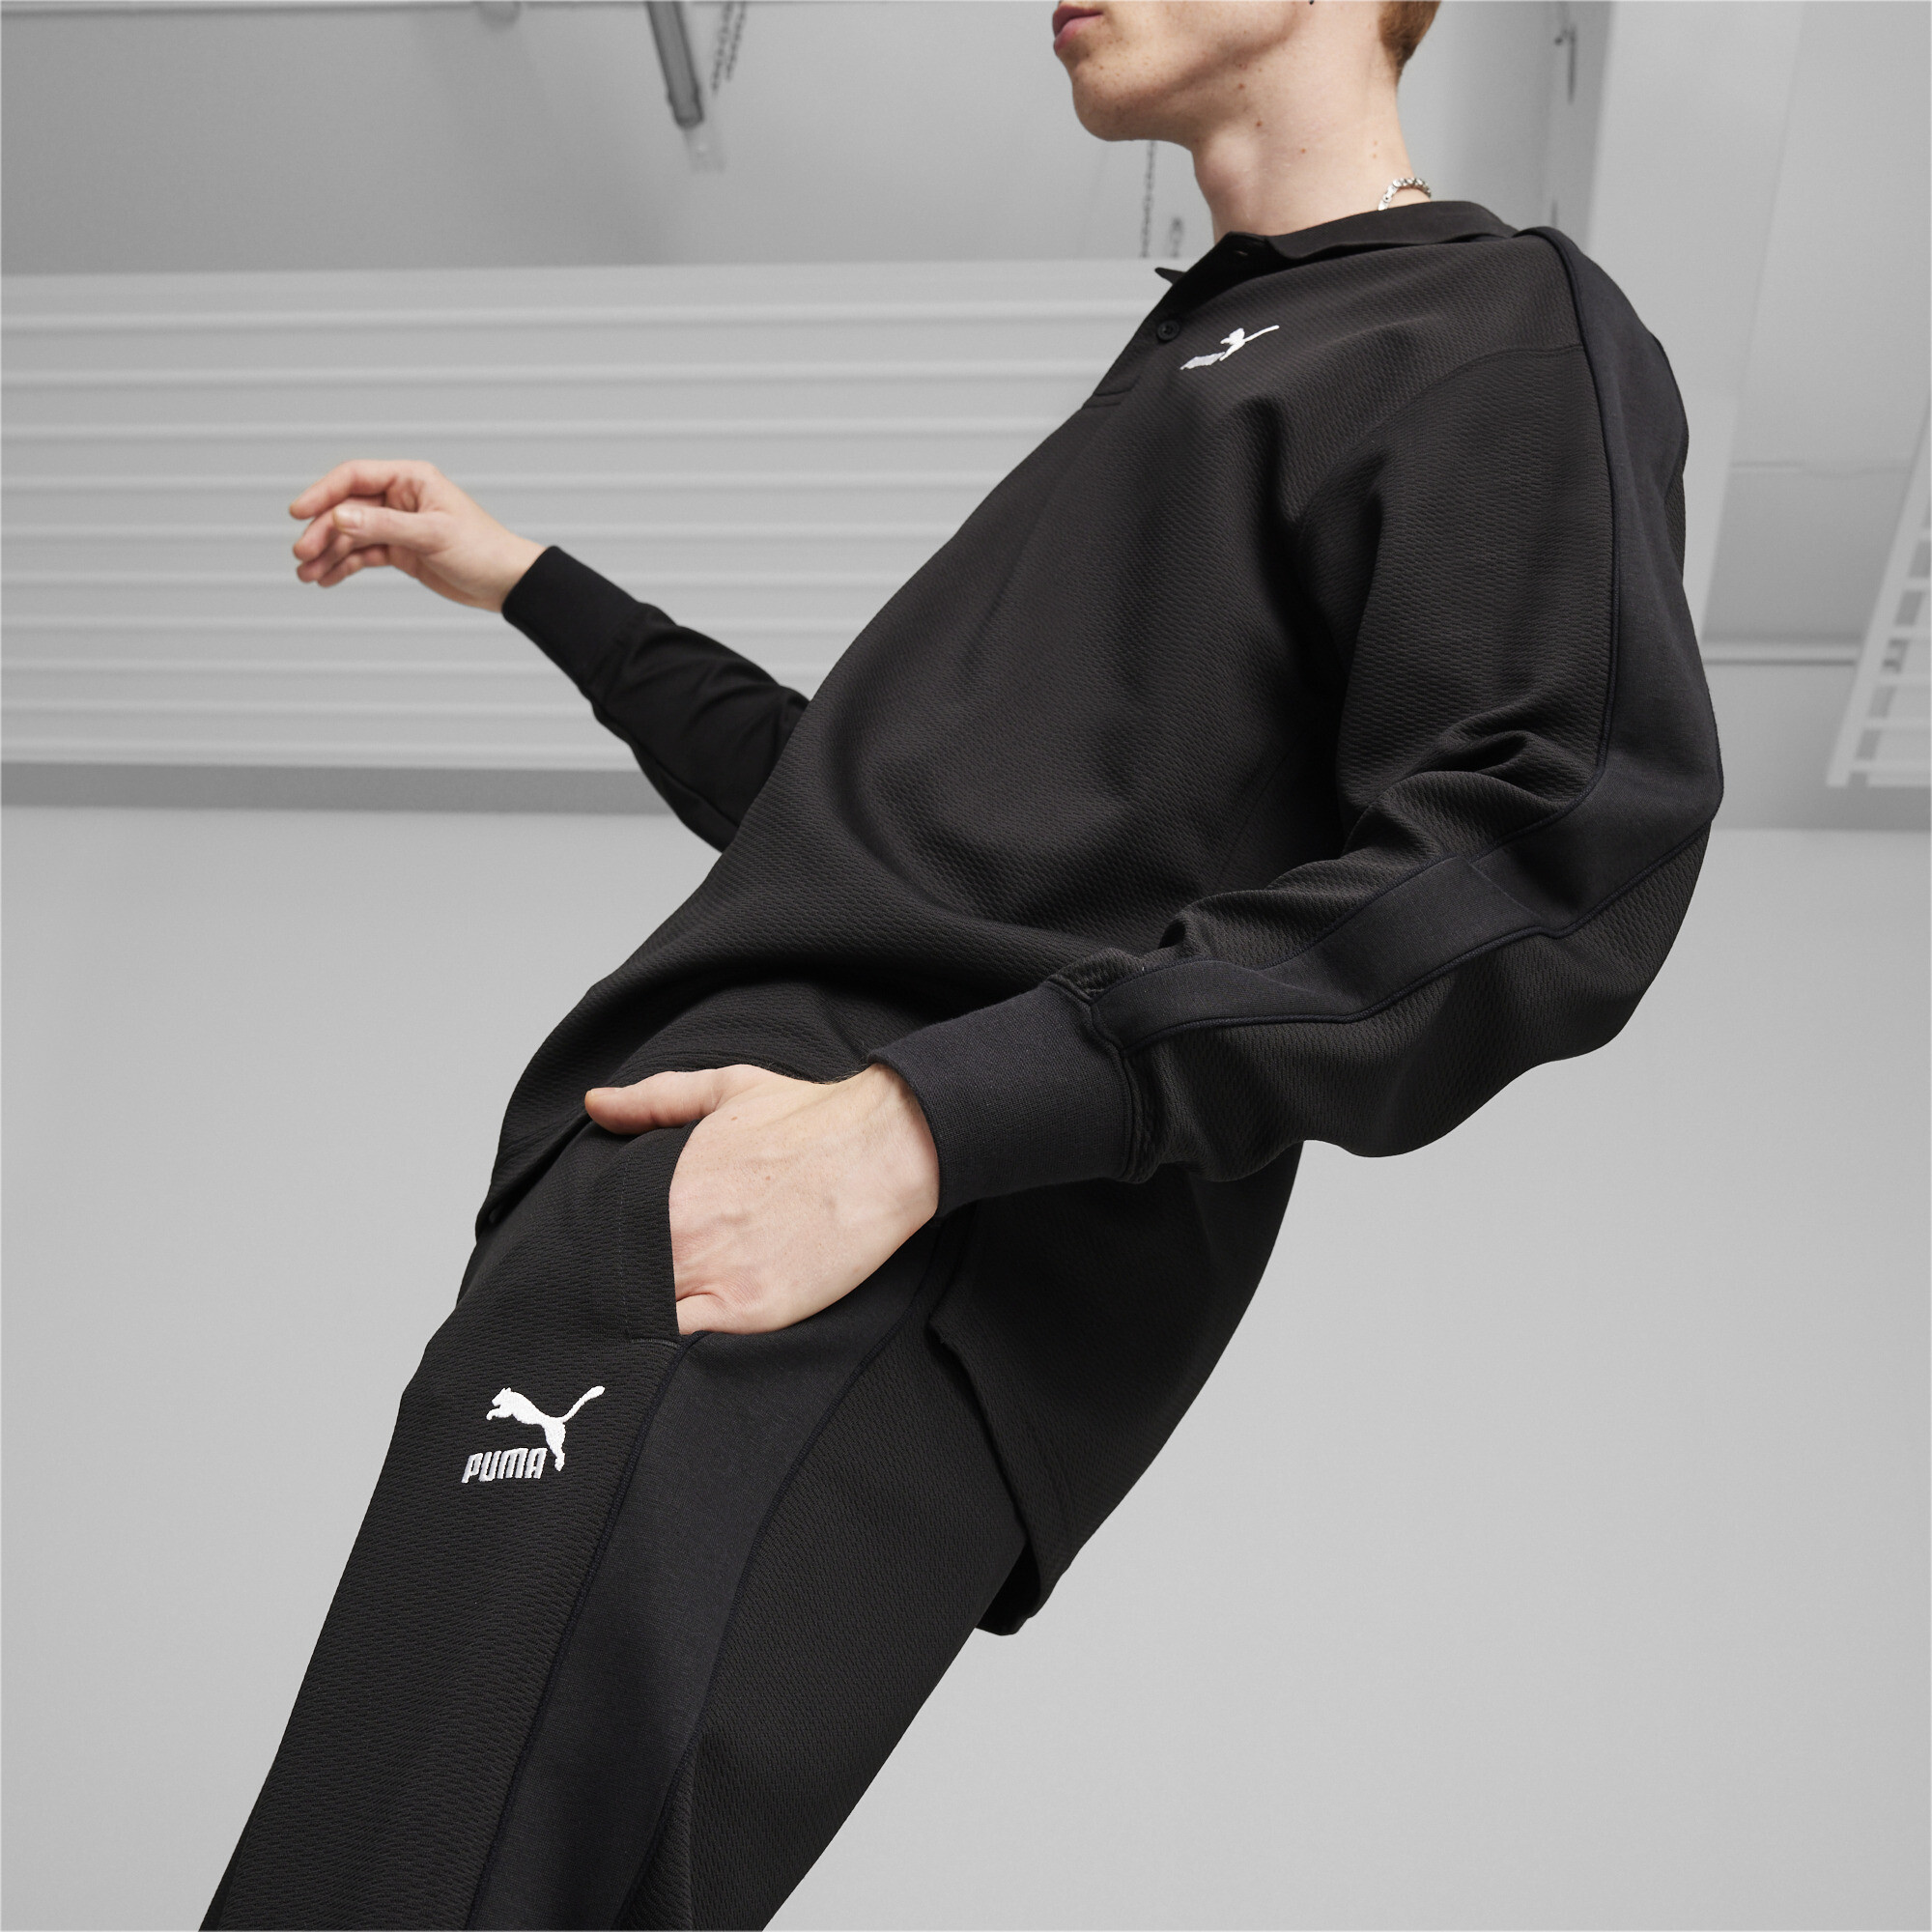 Men's Puma T7's Track Pants, Black, Size XS, Clothing